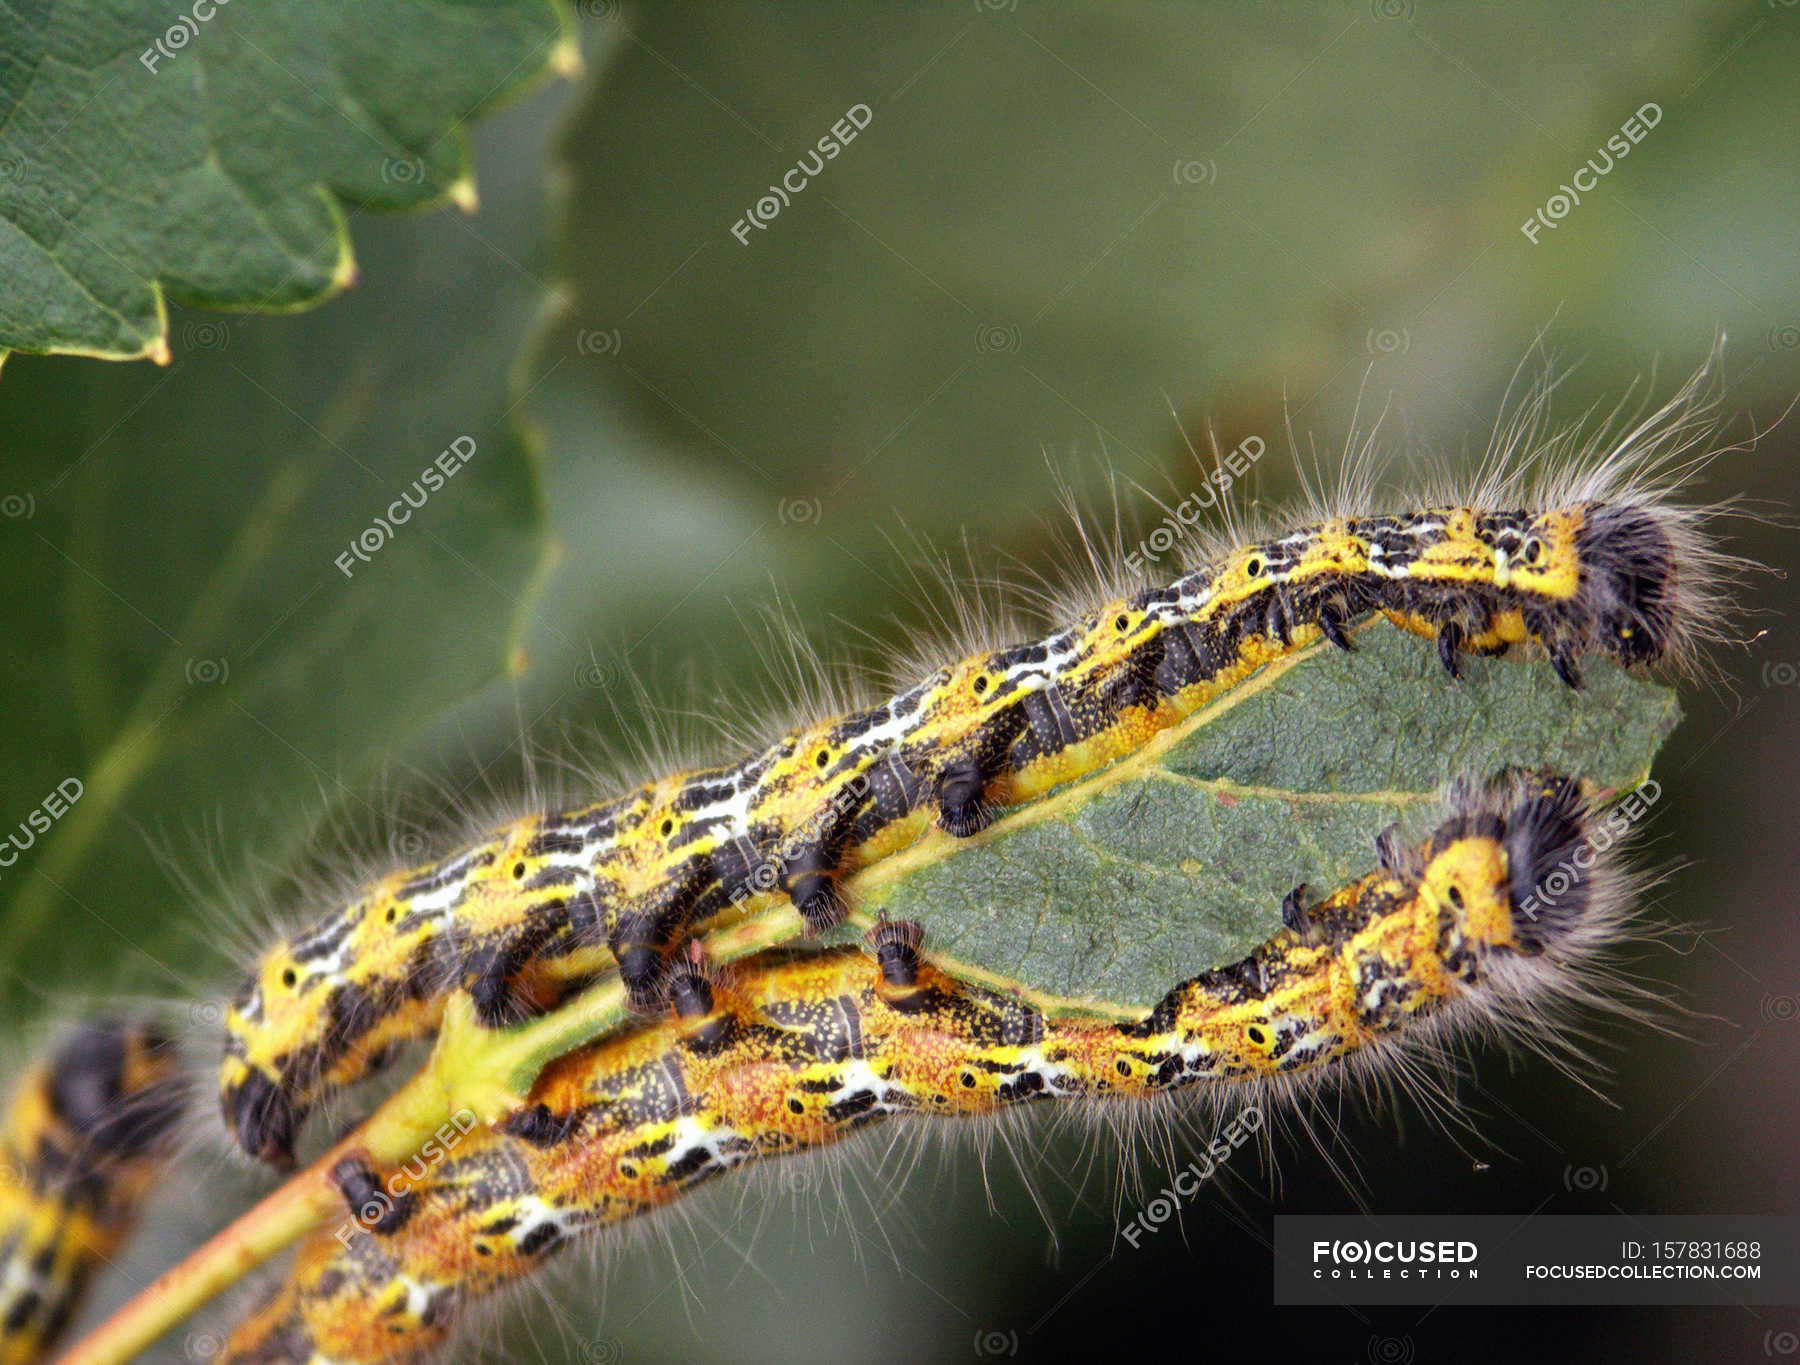 Crawling colorful caterpillar — Stock Photo | #157831688